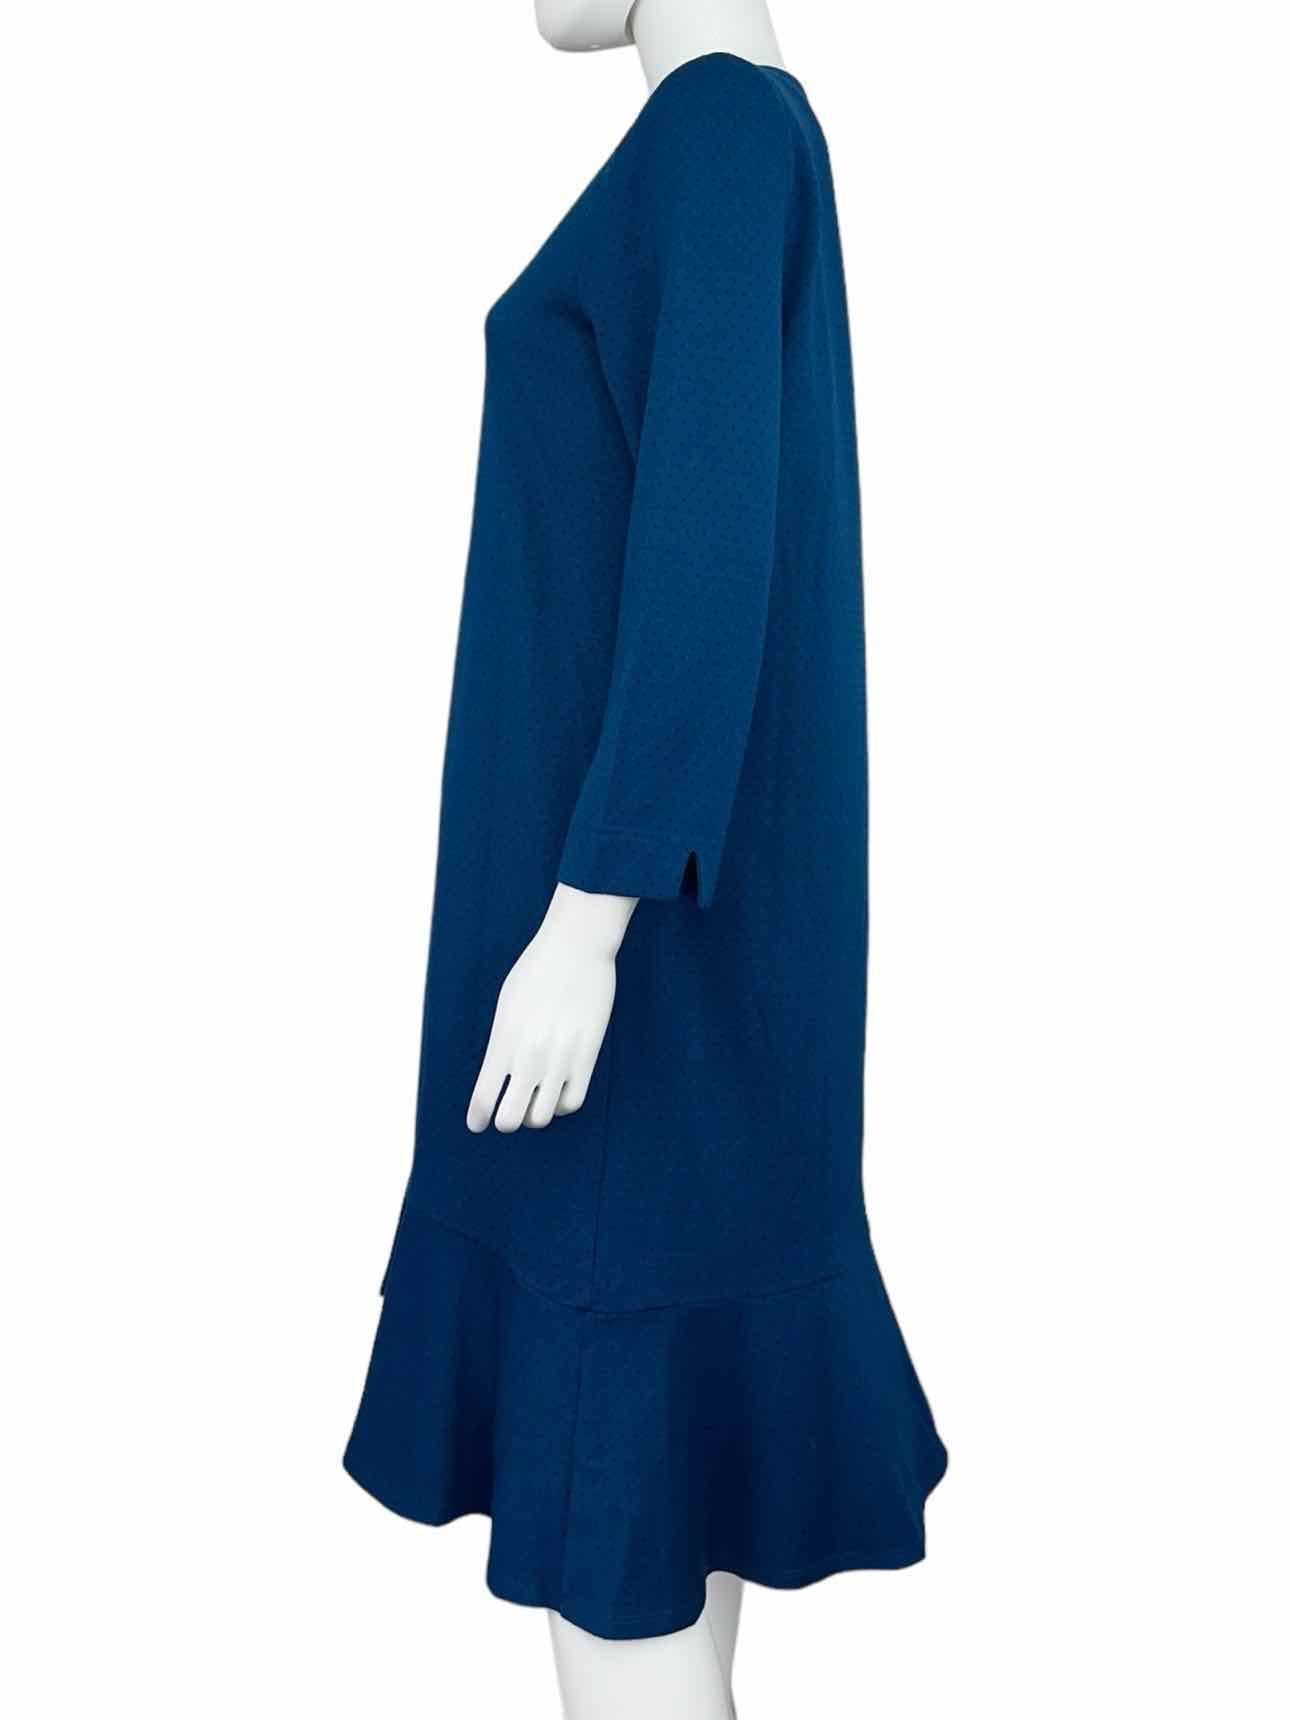 J. Jill Oxford Blue Polka Dot Dress Size M